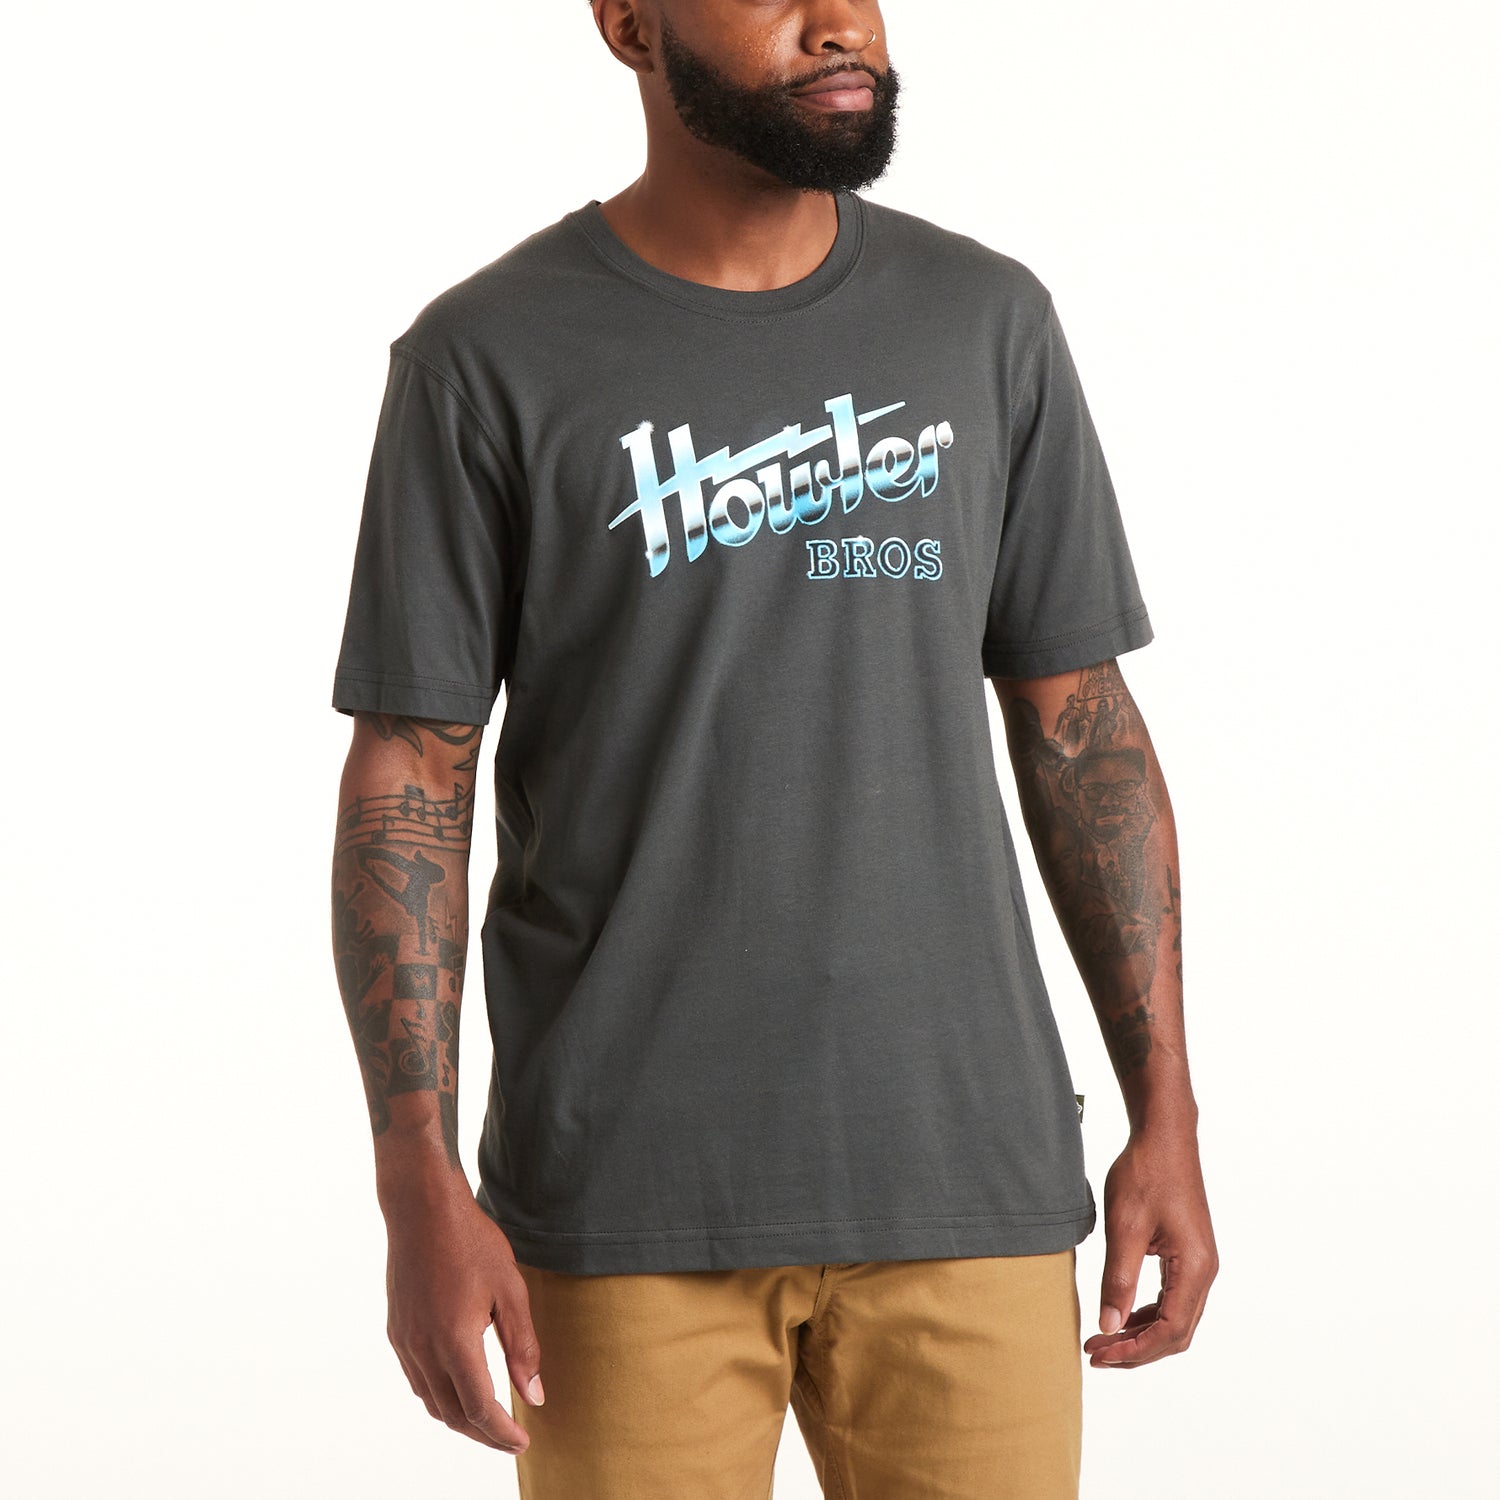 Howler Electric Metallic T-Shirt